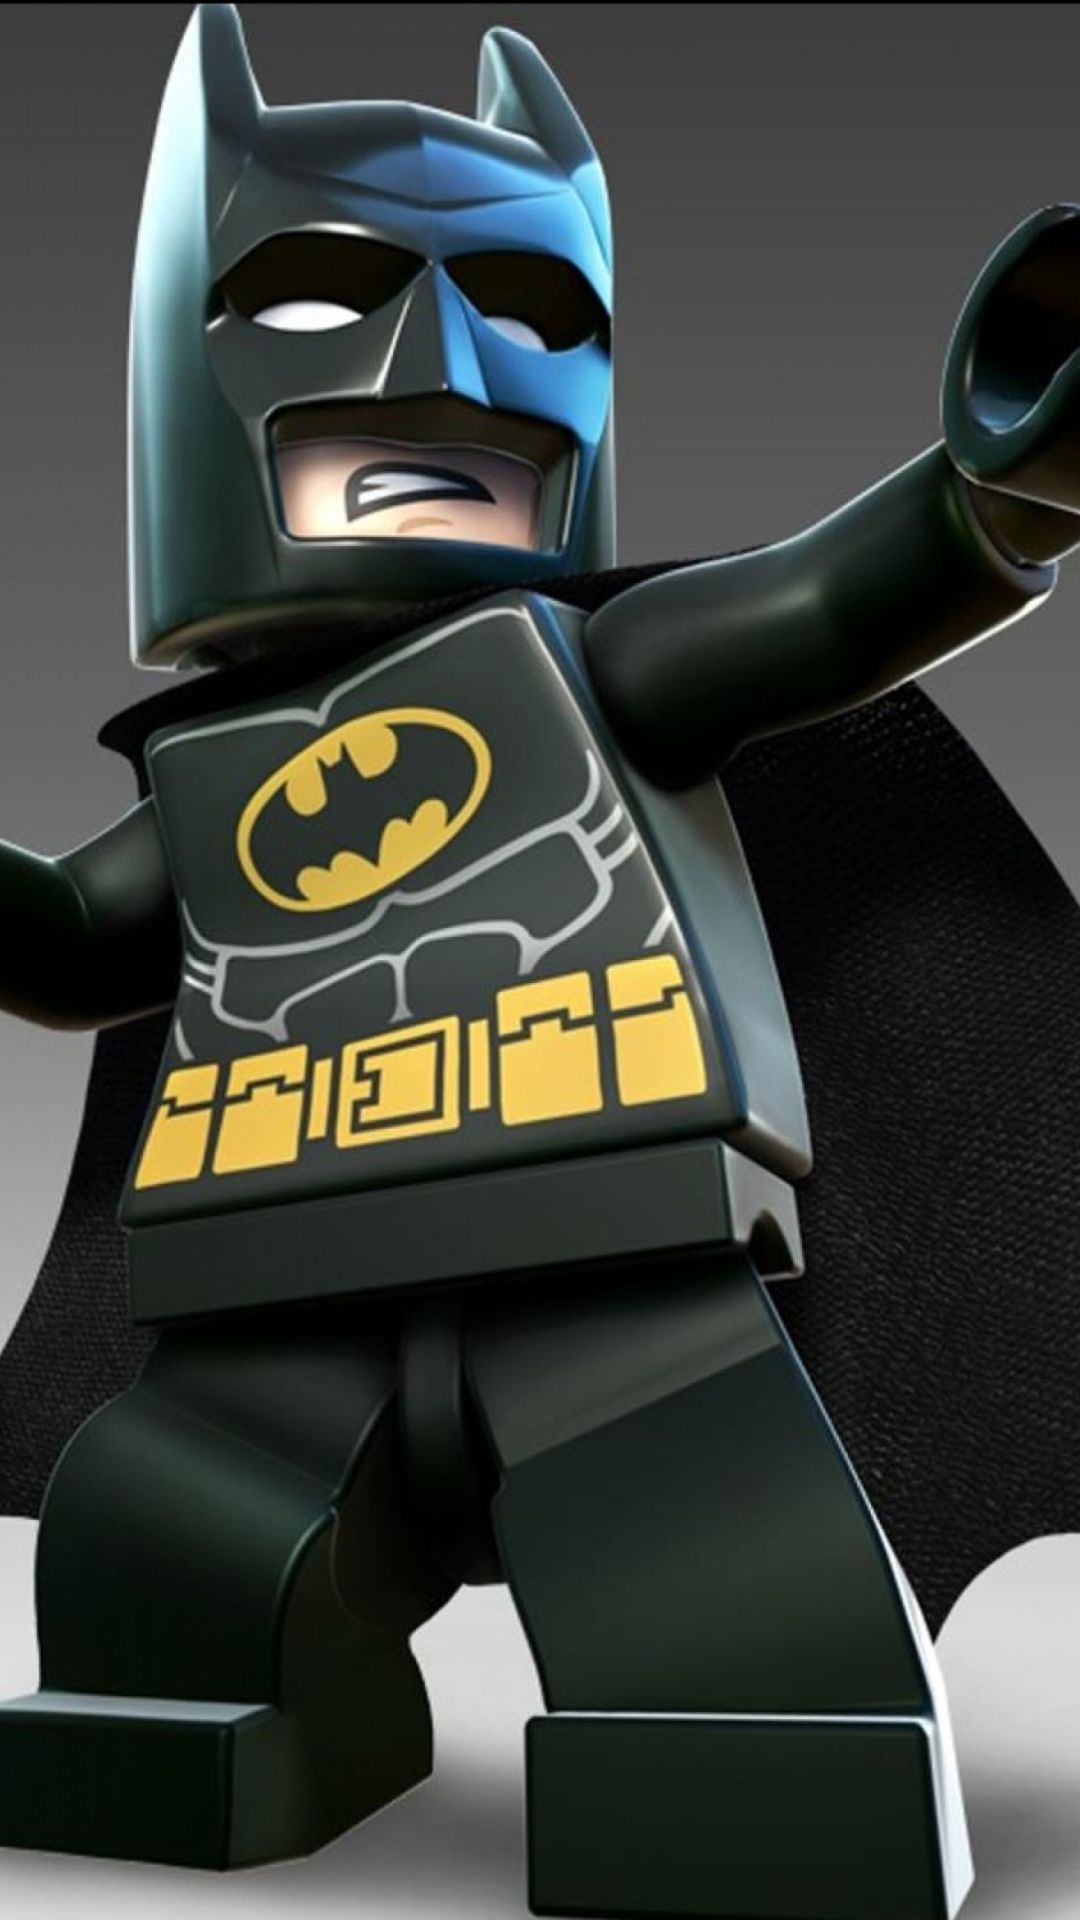 Lego-Batman-1080x1920.jpg